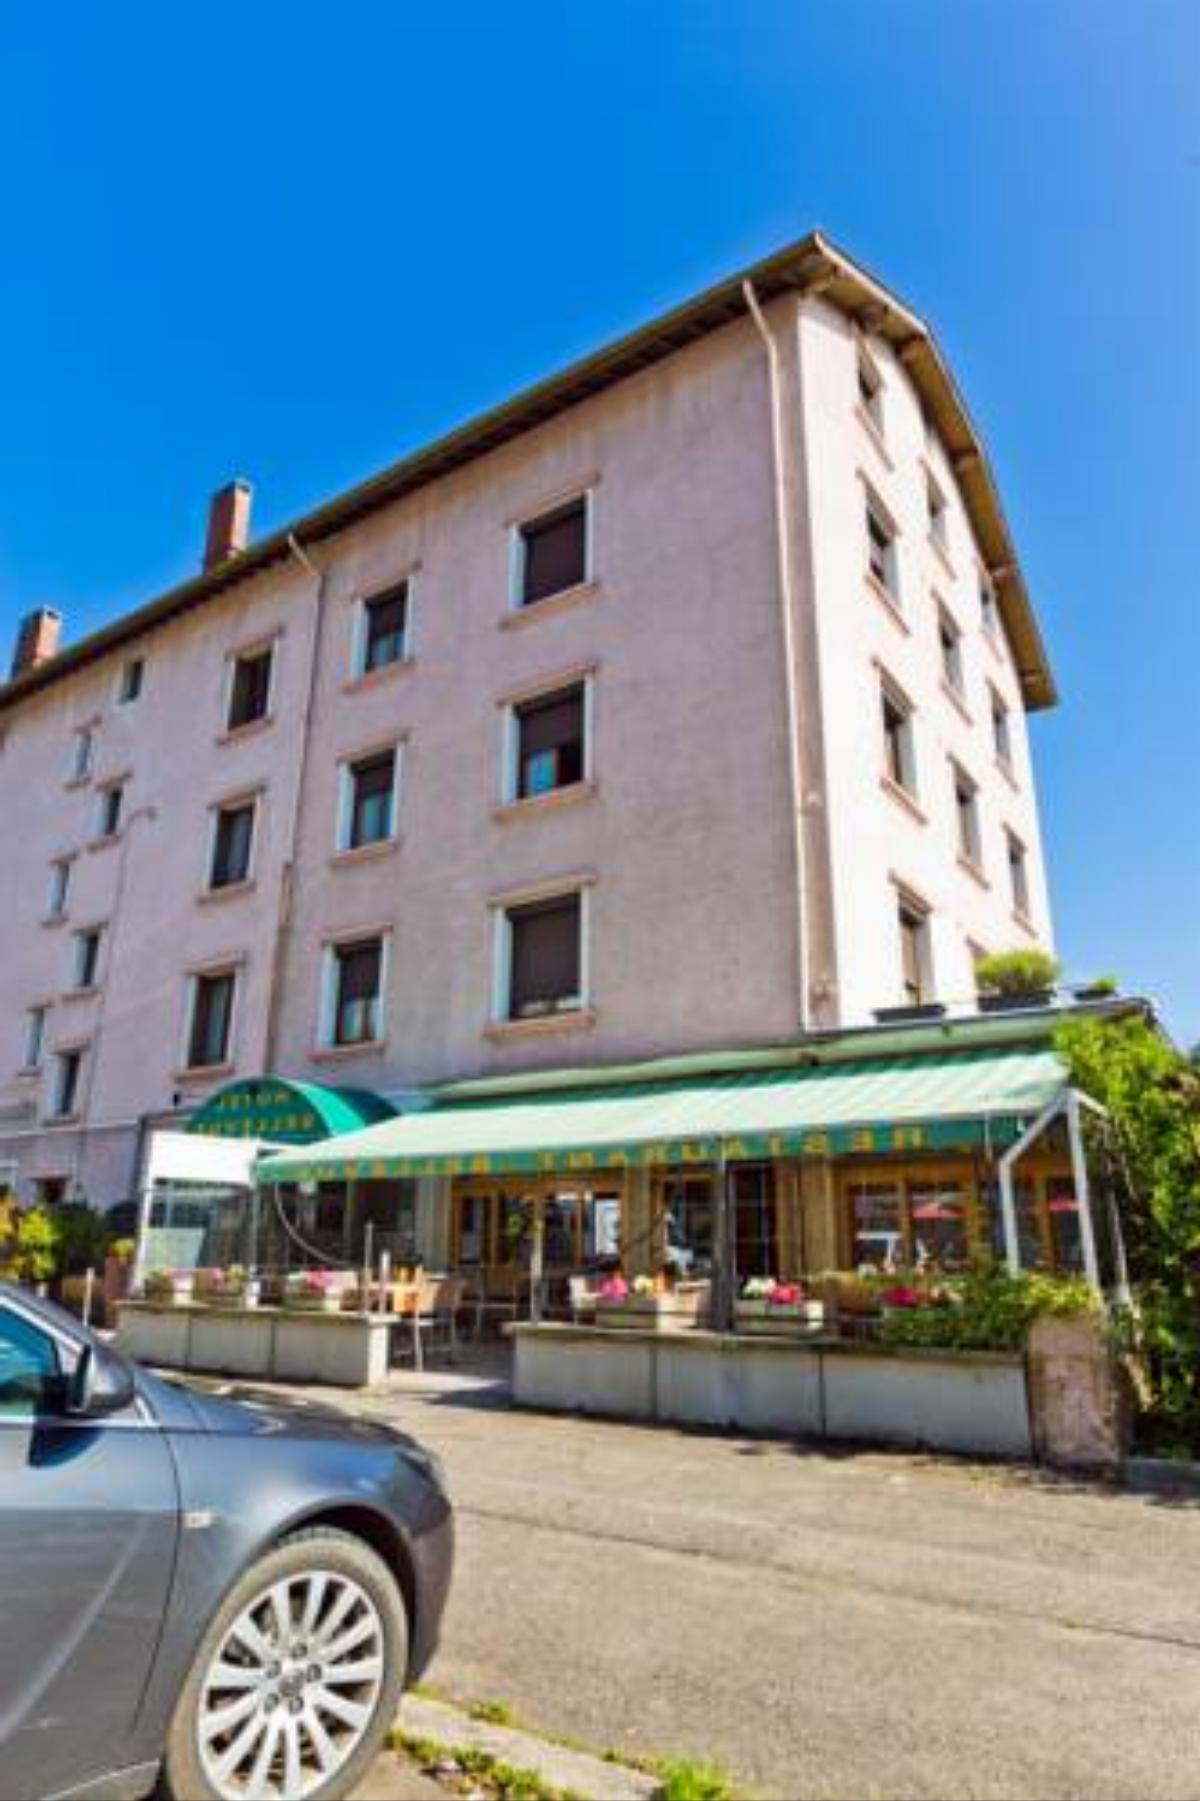 Hotel Bellevue Hotel Annecy France